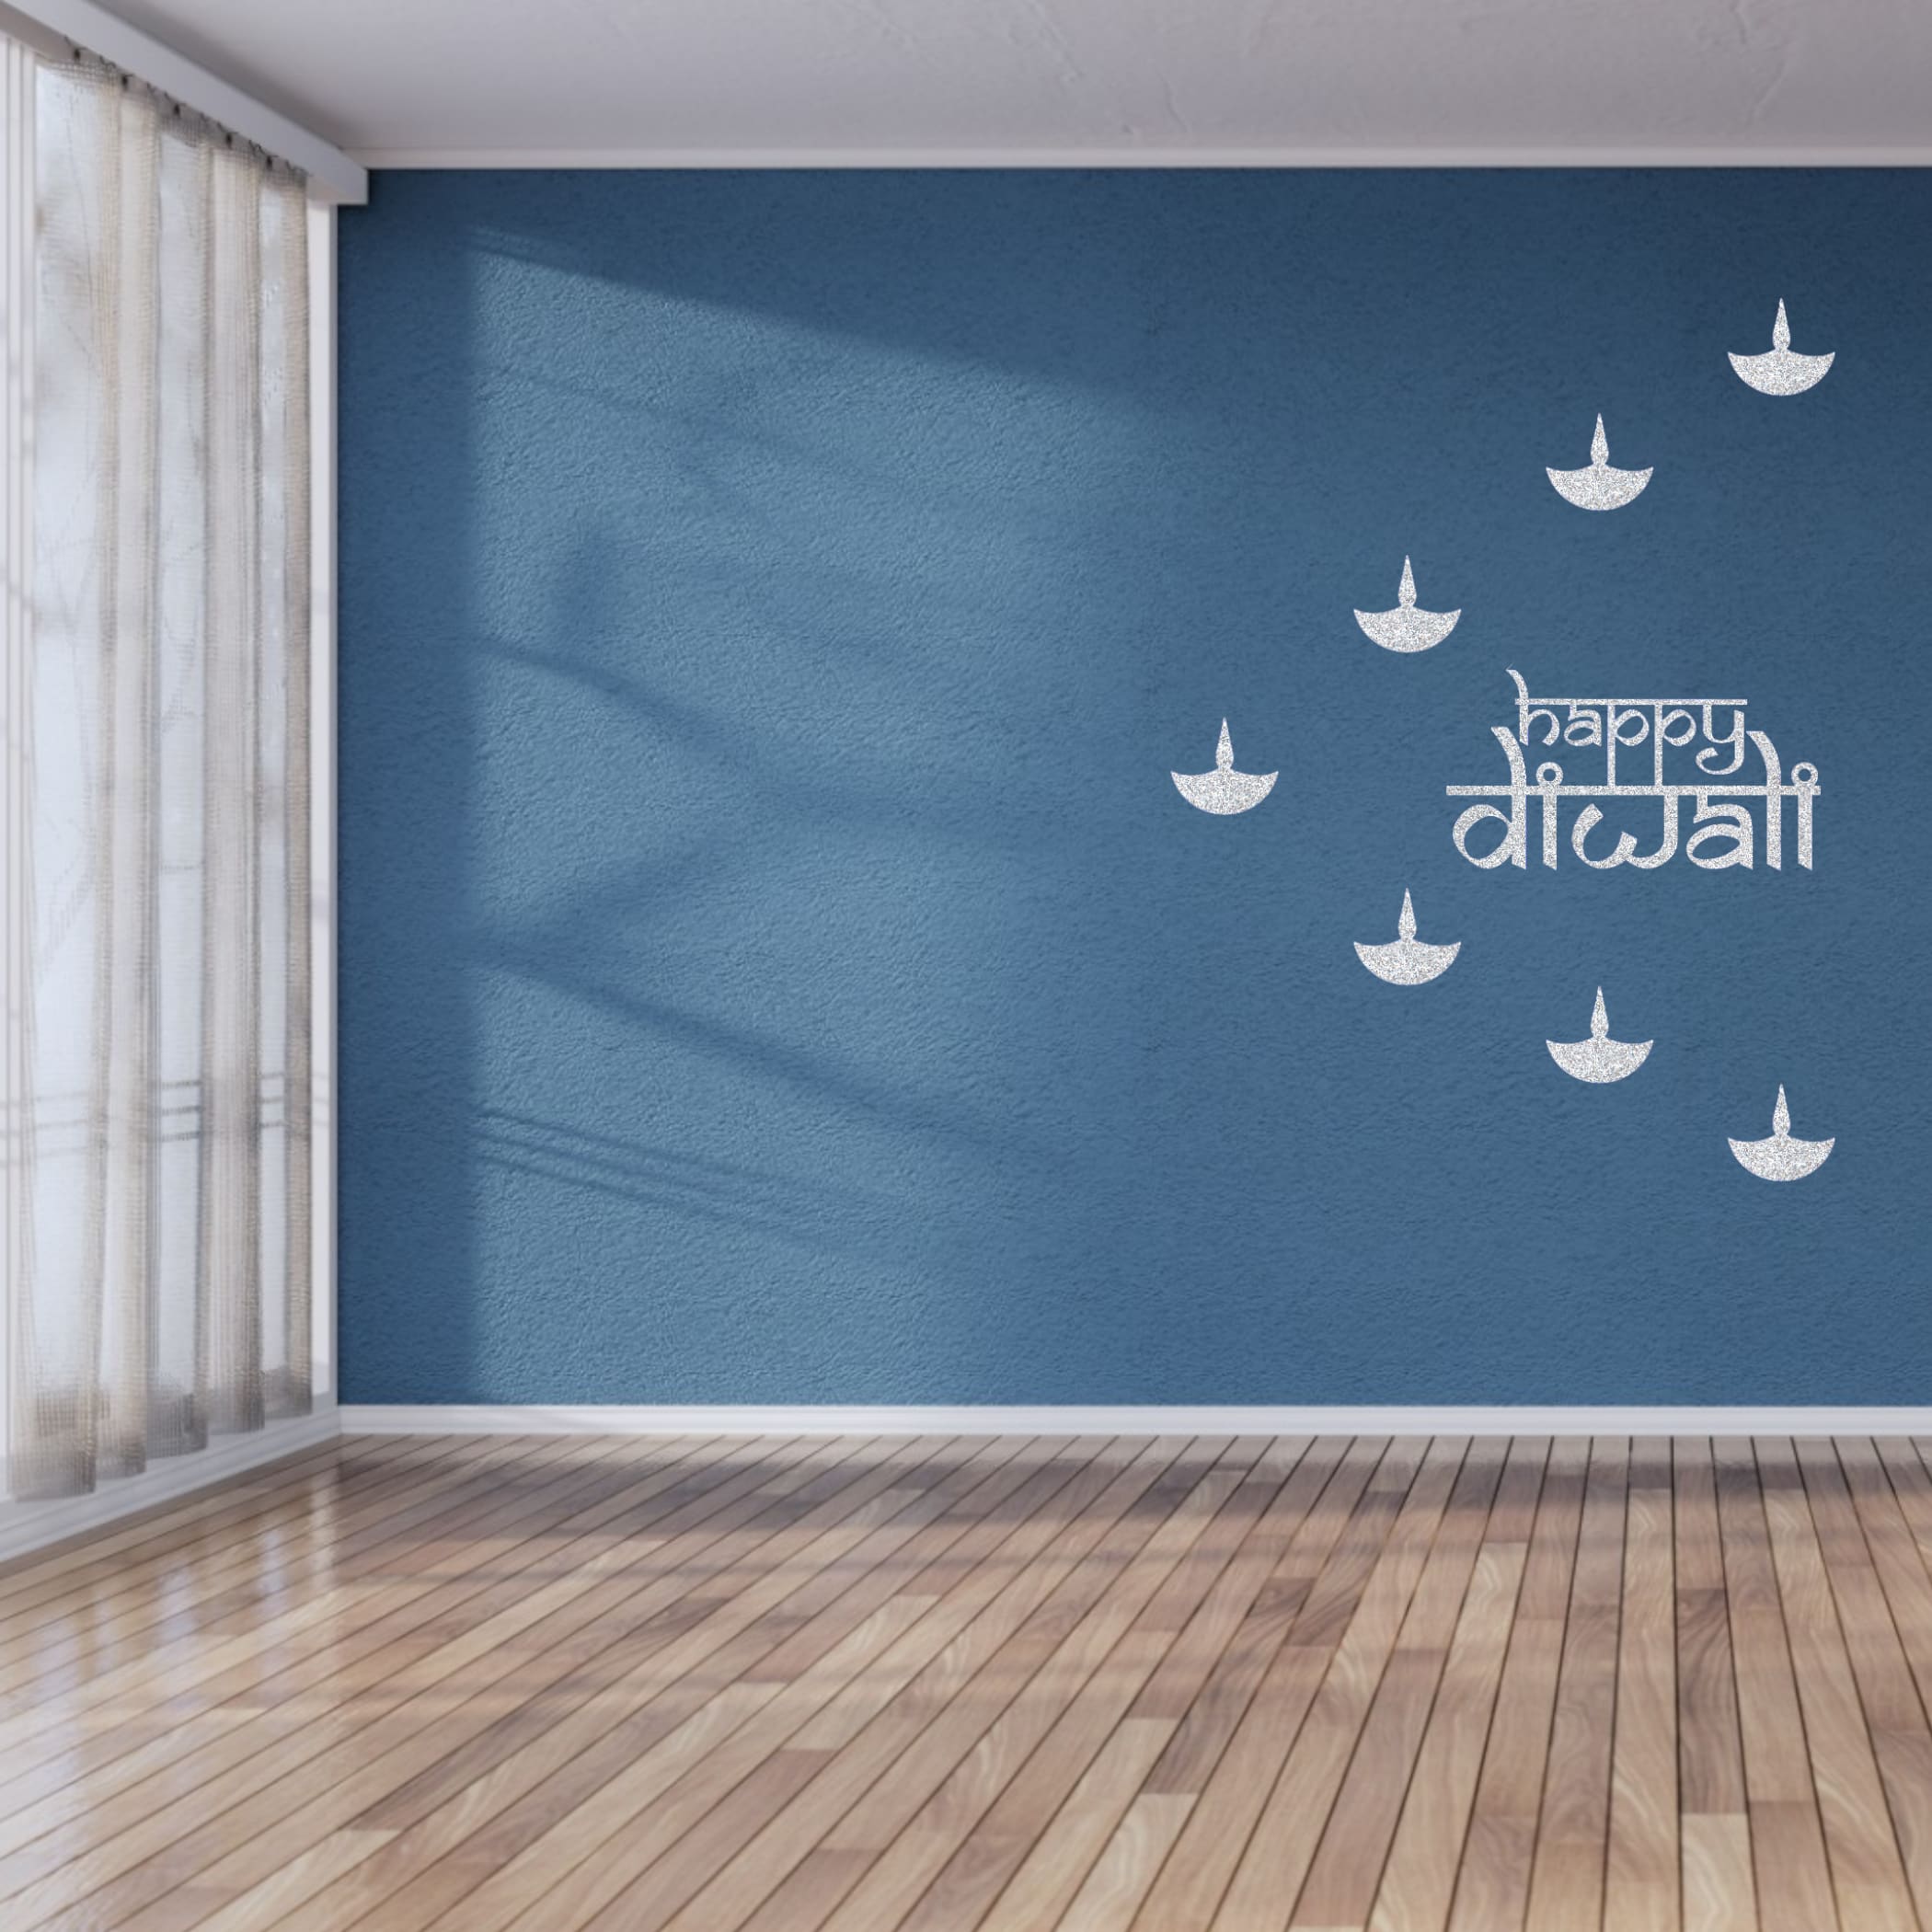 Happy diwali sign decoration cutout home decor backdrop -